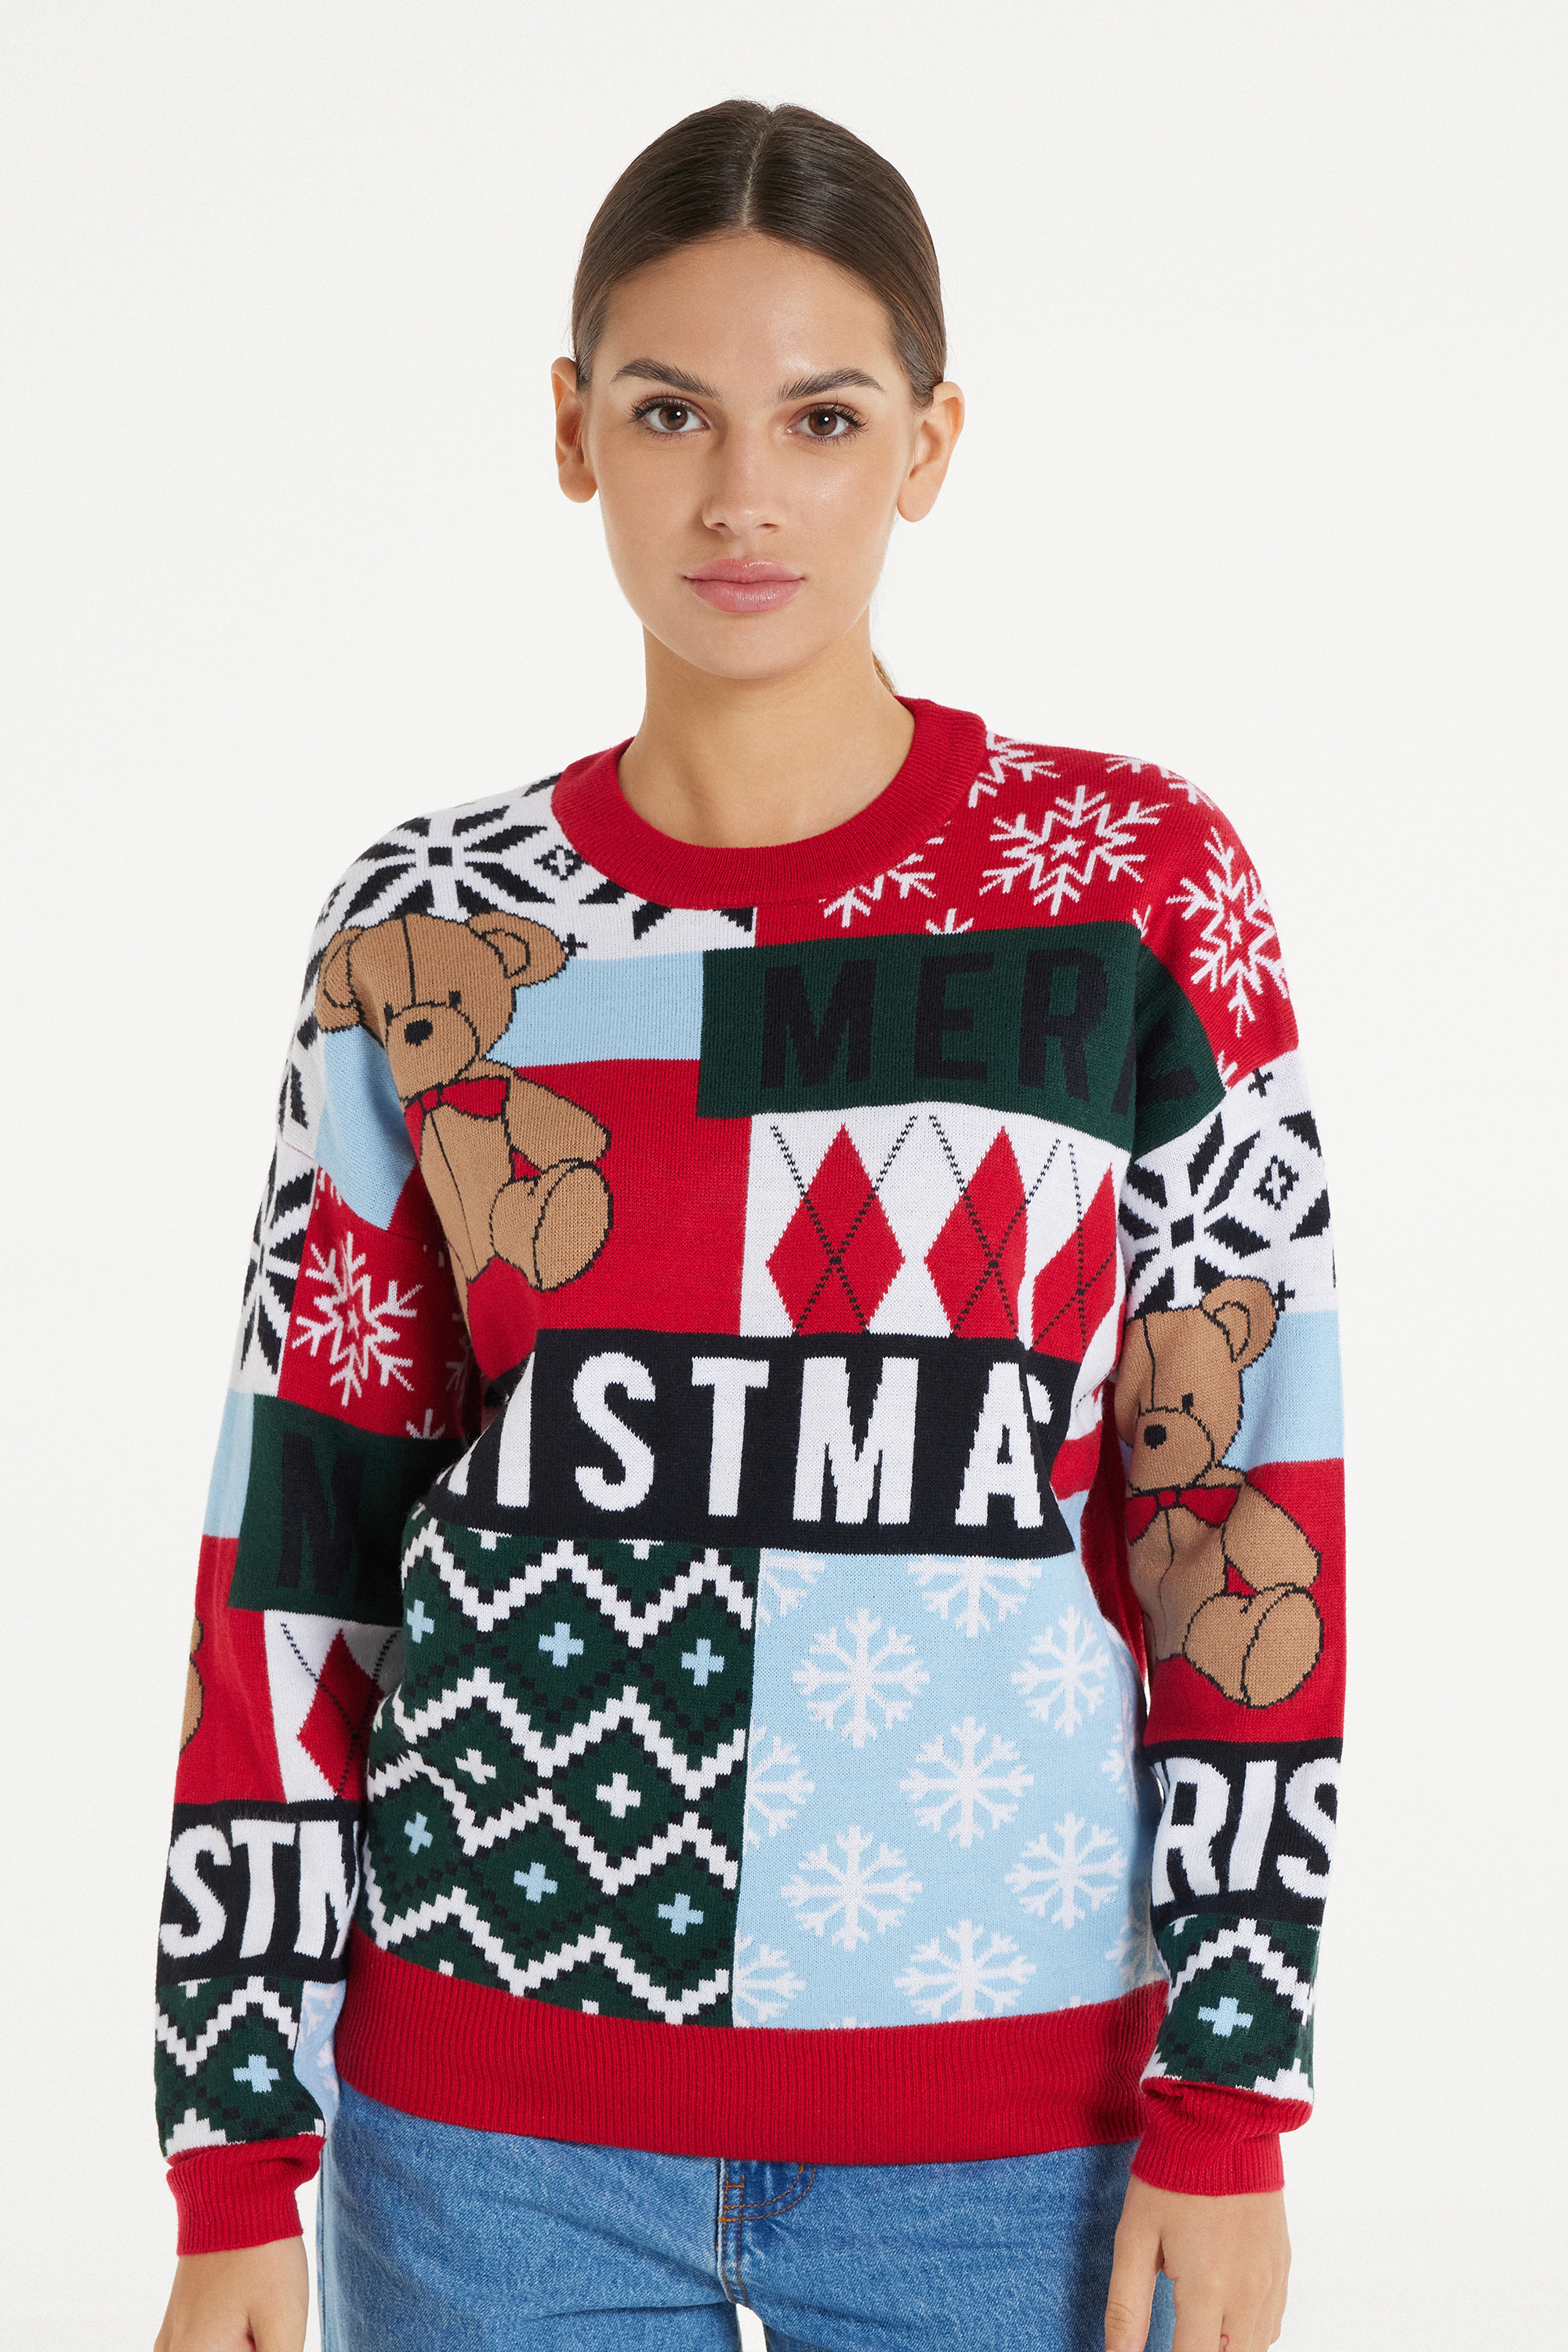 Unisex Long-Sleeve Christmas Sweater